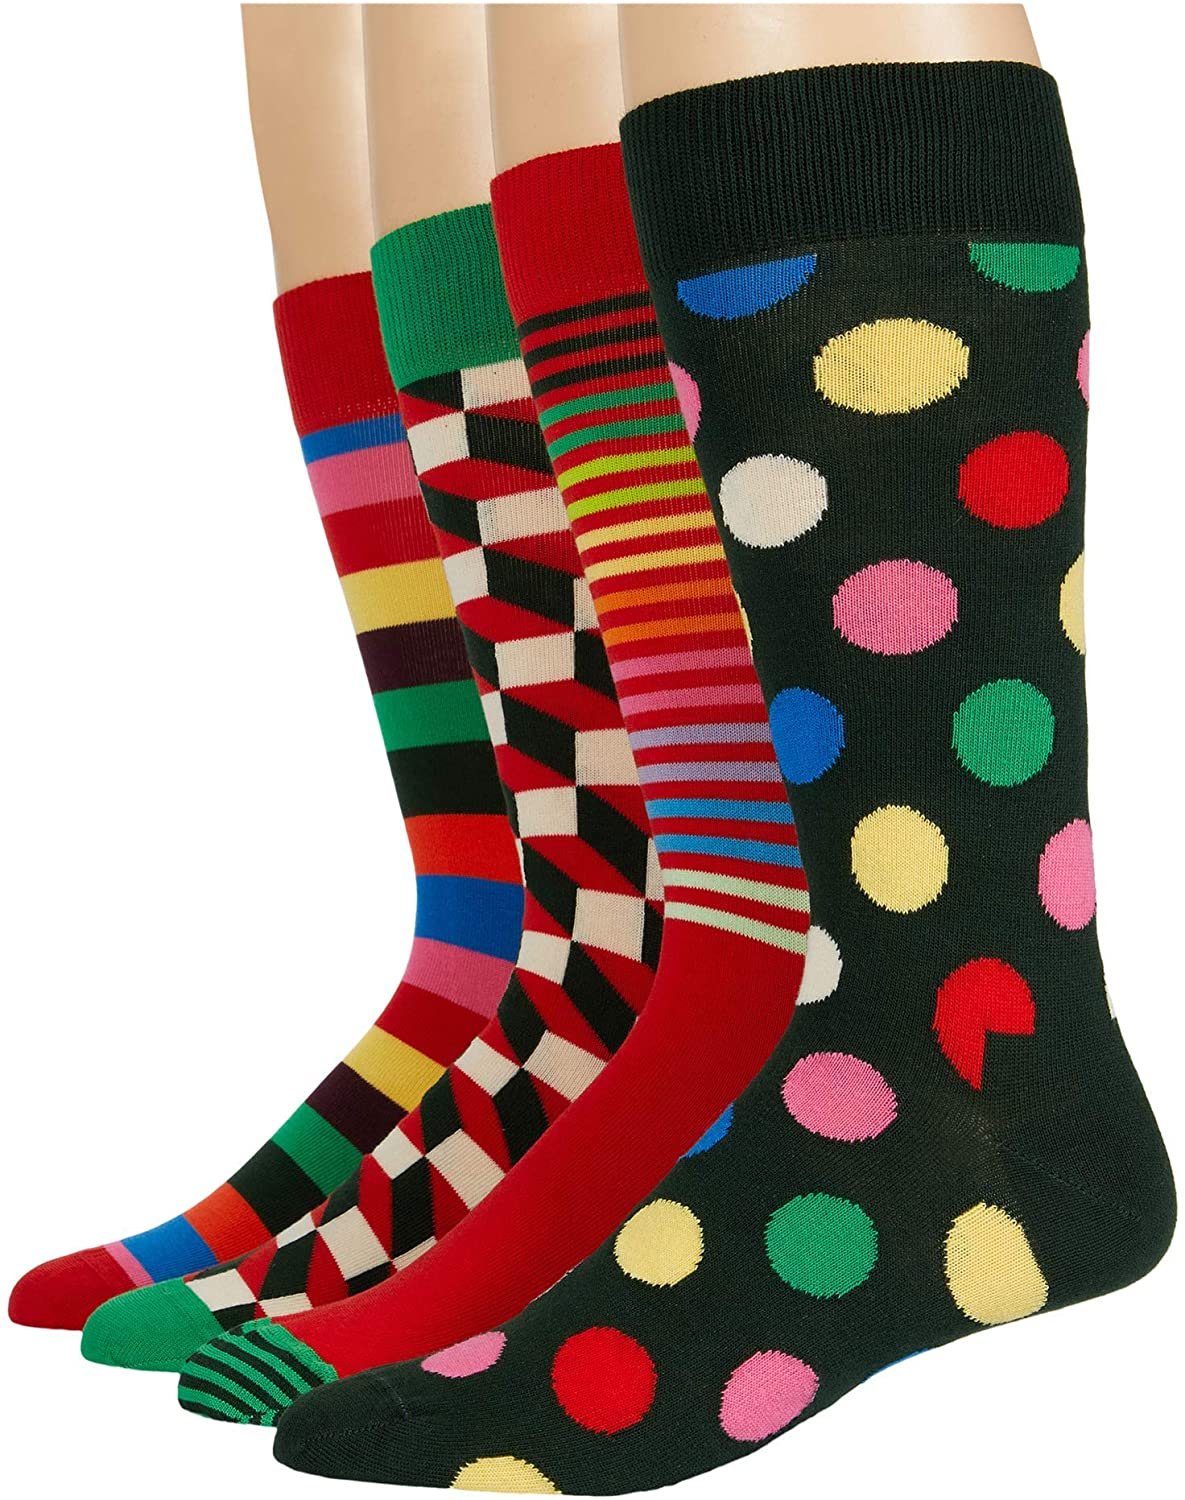 Classic Holiday Socks 4-Pack Gift Set